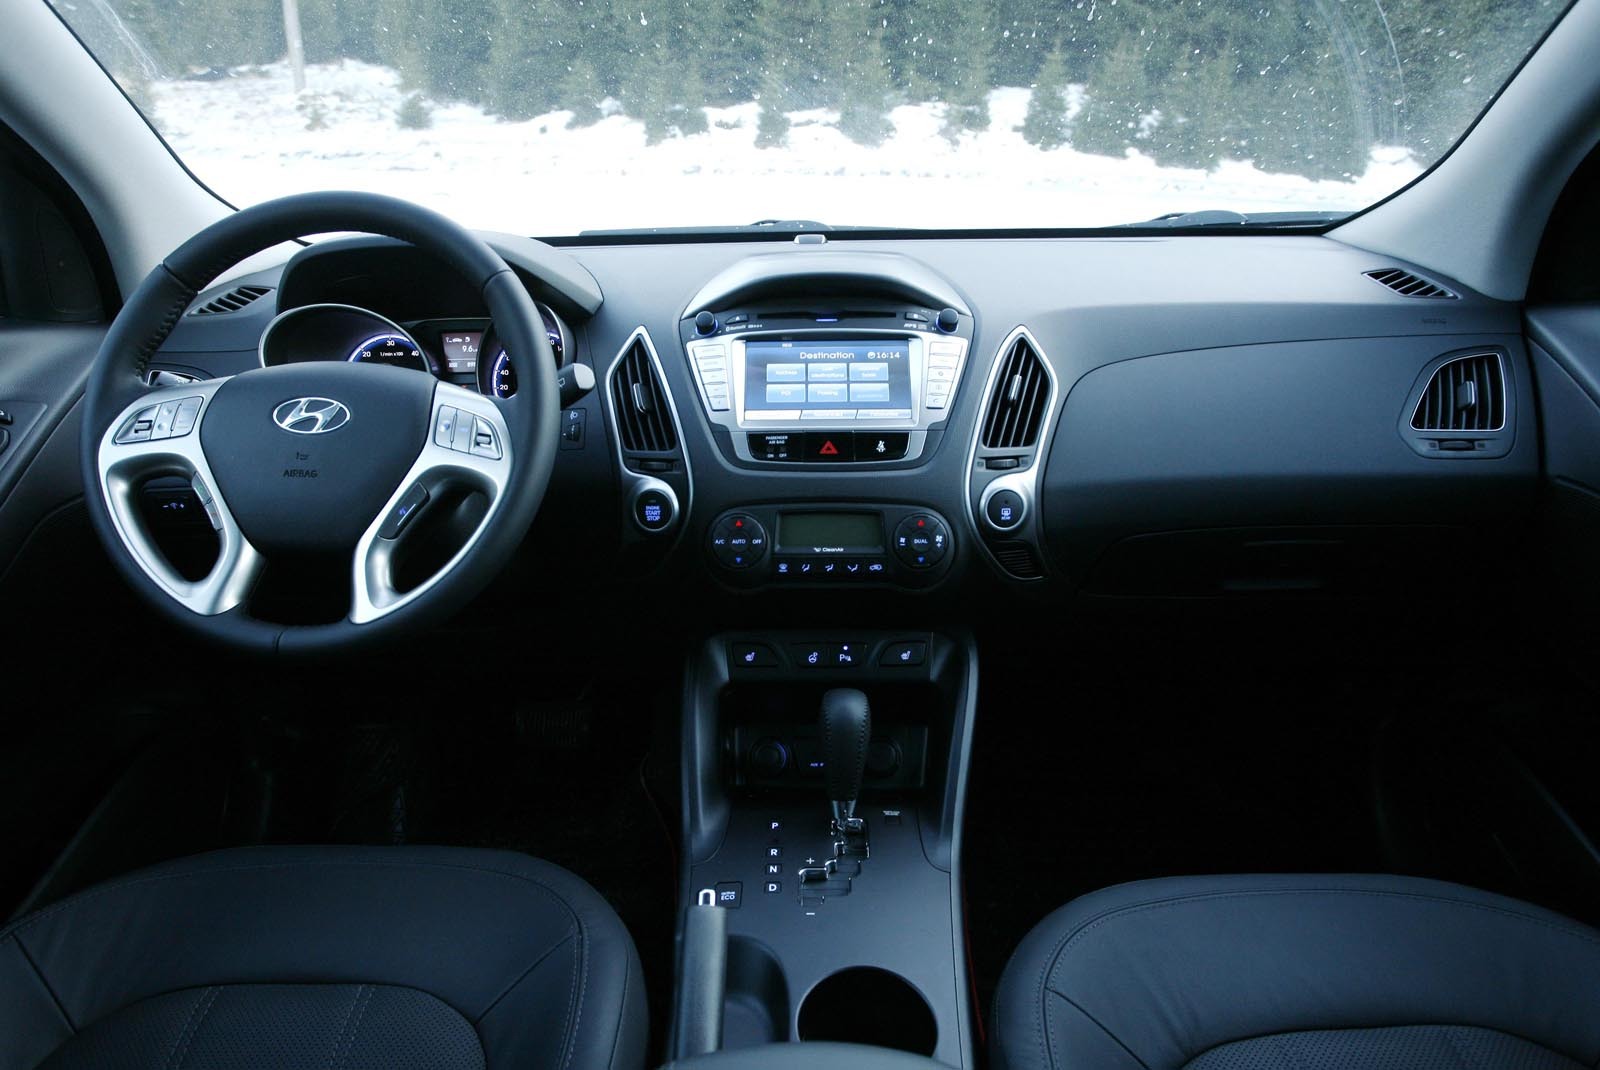 Hyundai ix35 continua si la interiror stilul sofisticat al interiorului, avand o echipare bogata